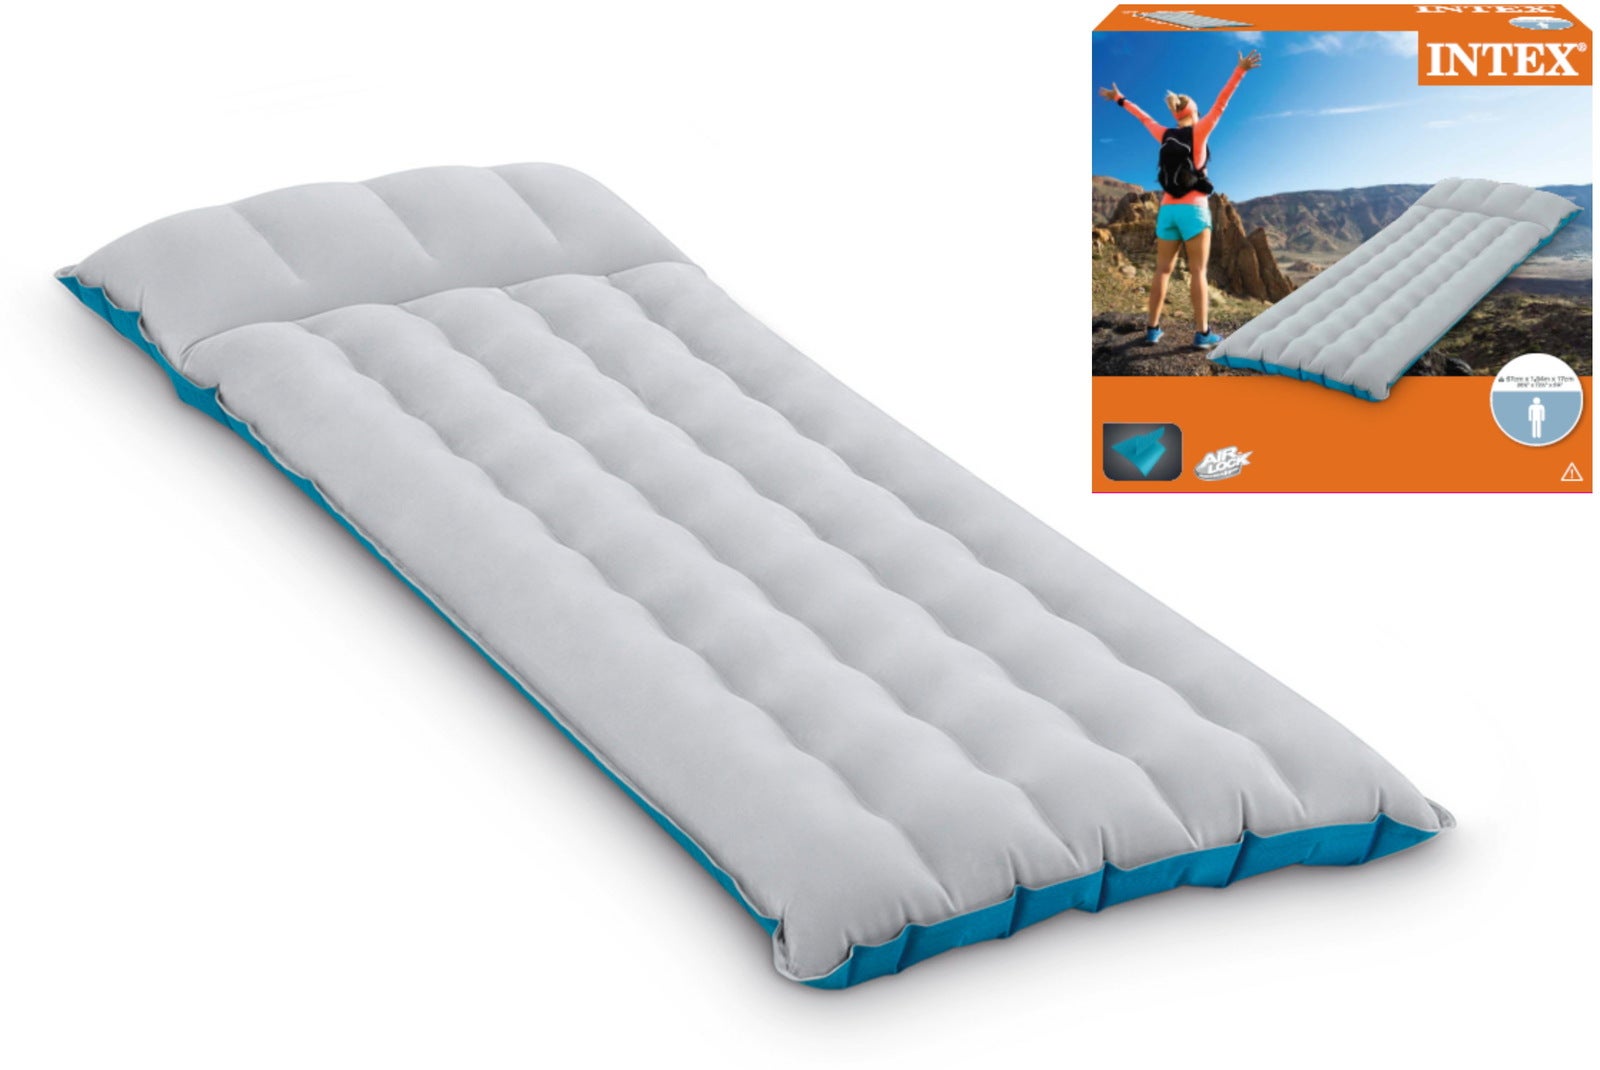 intex camping air mattress inflate